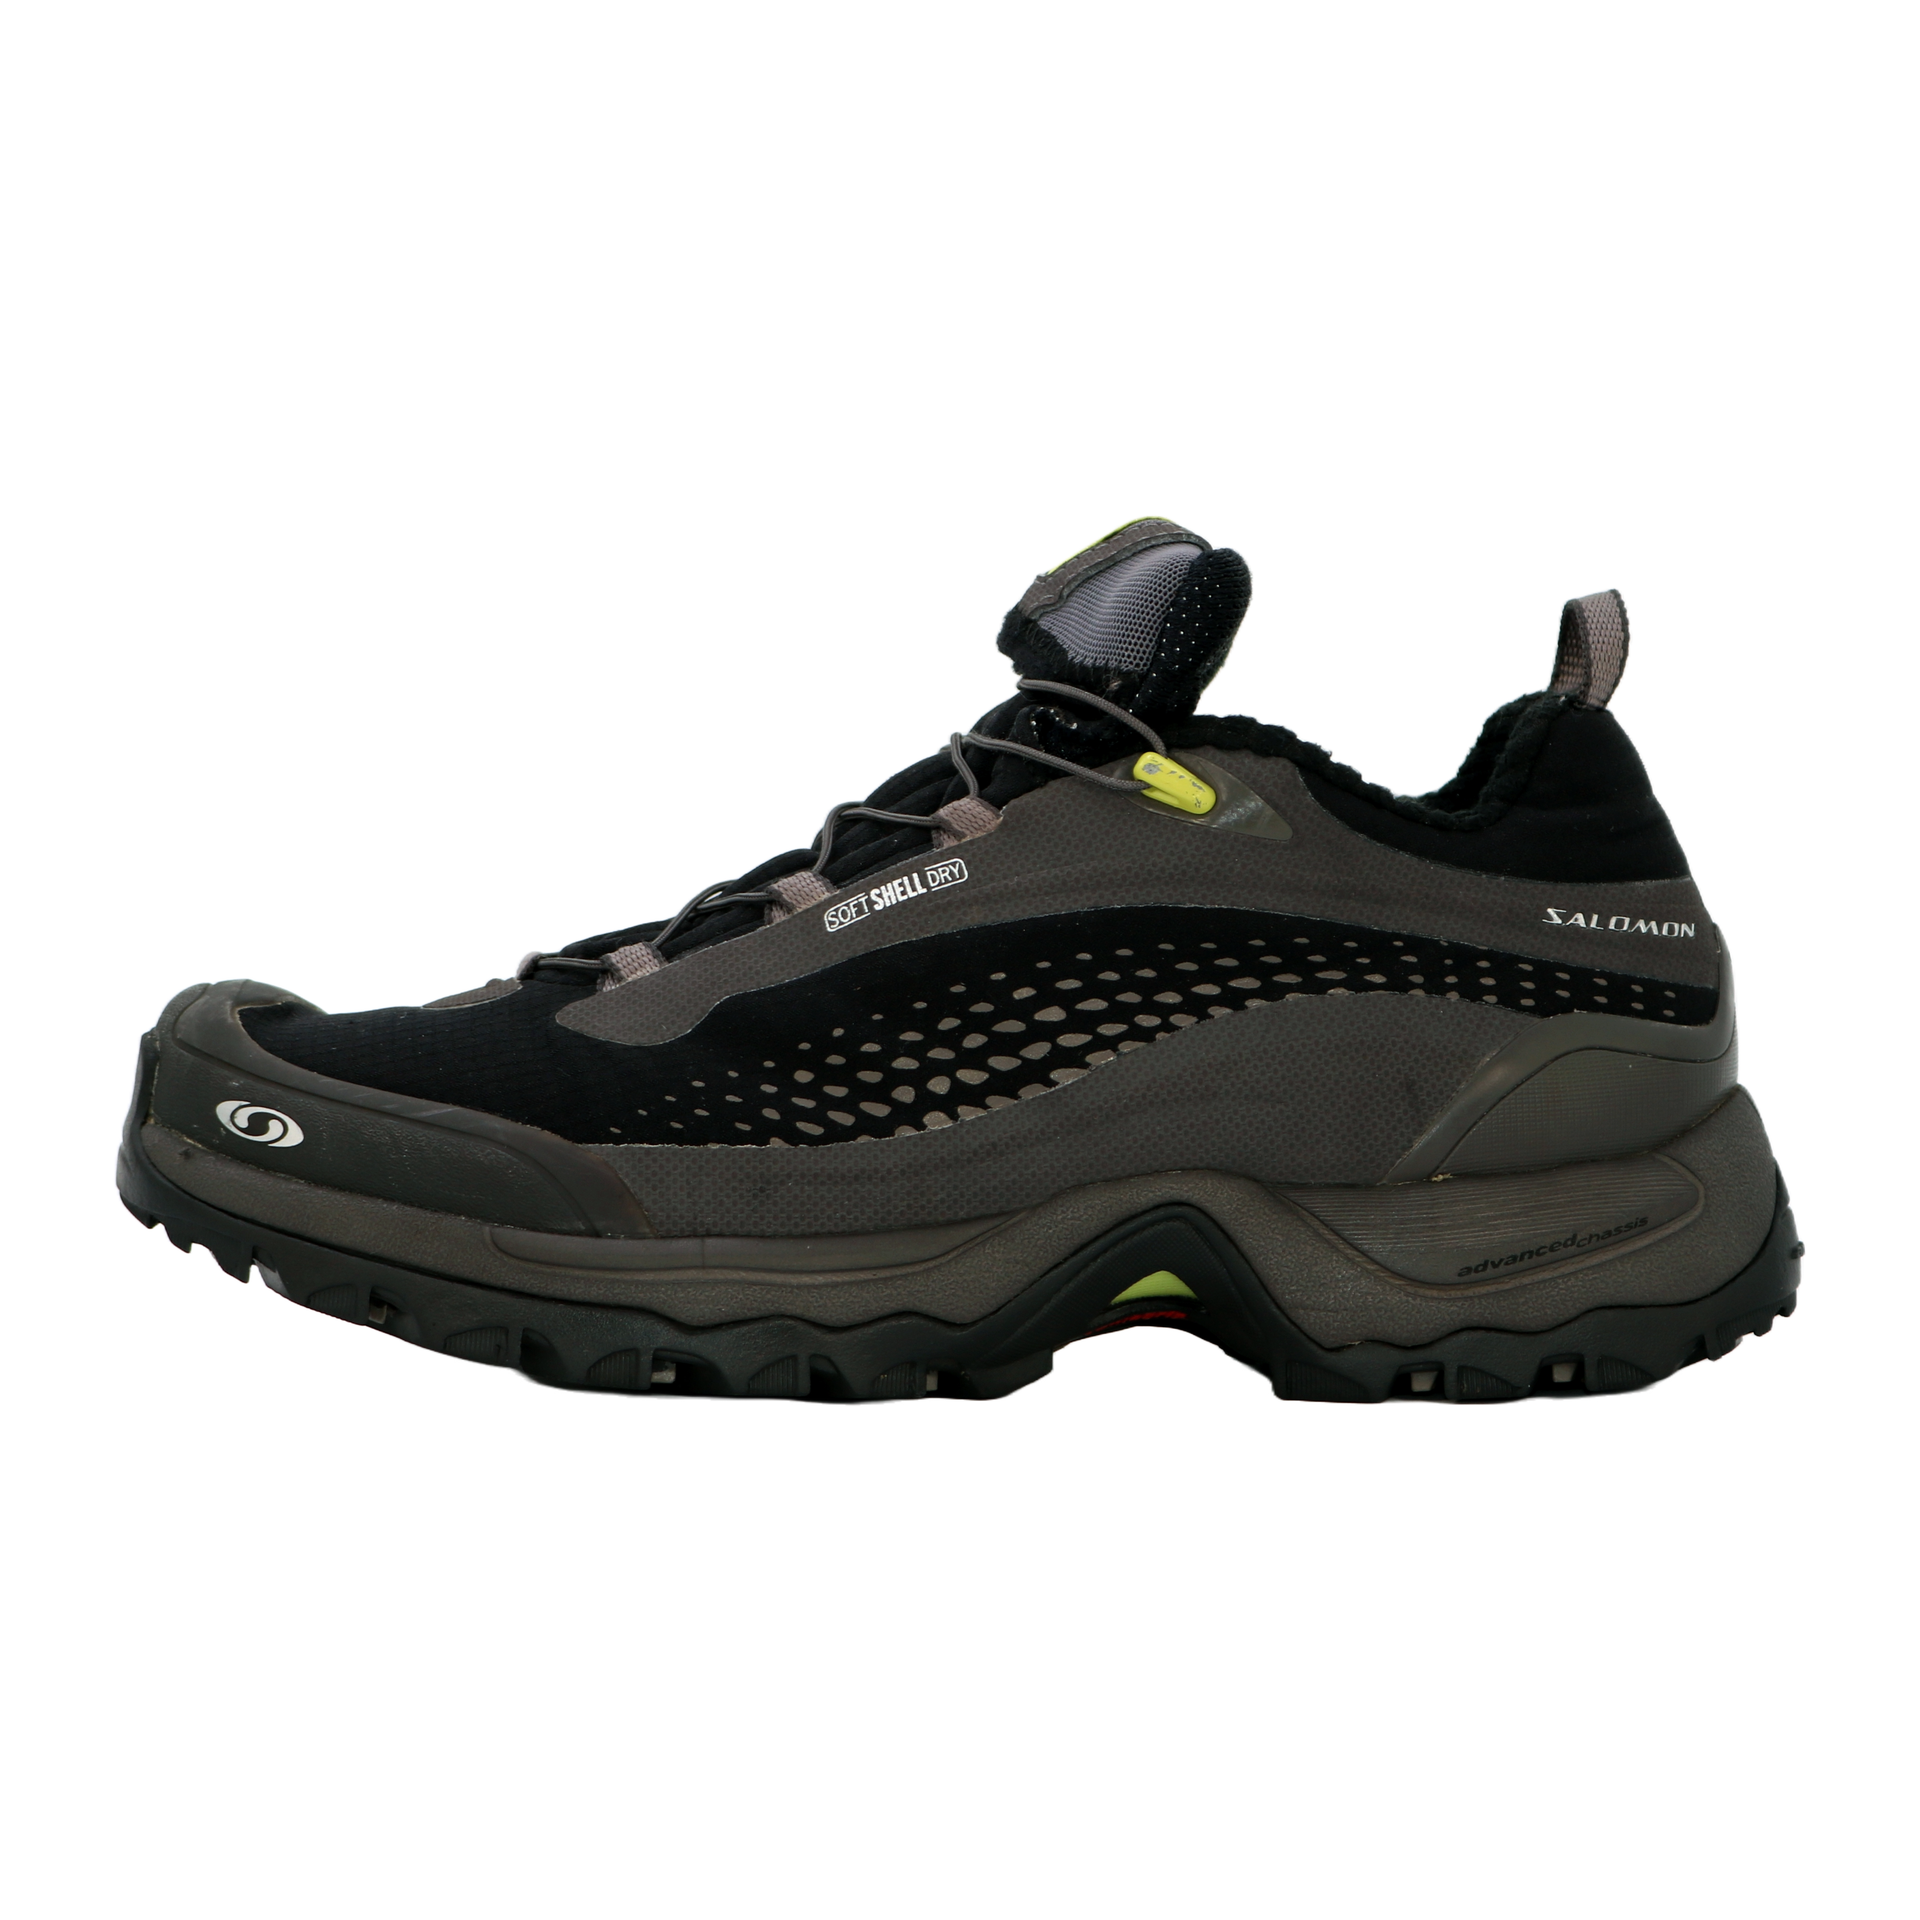 Salomon Soft Shell Dry Seamless Hiking Shoes - Size 7 Vortex Supply LLC